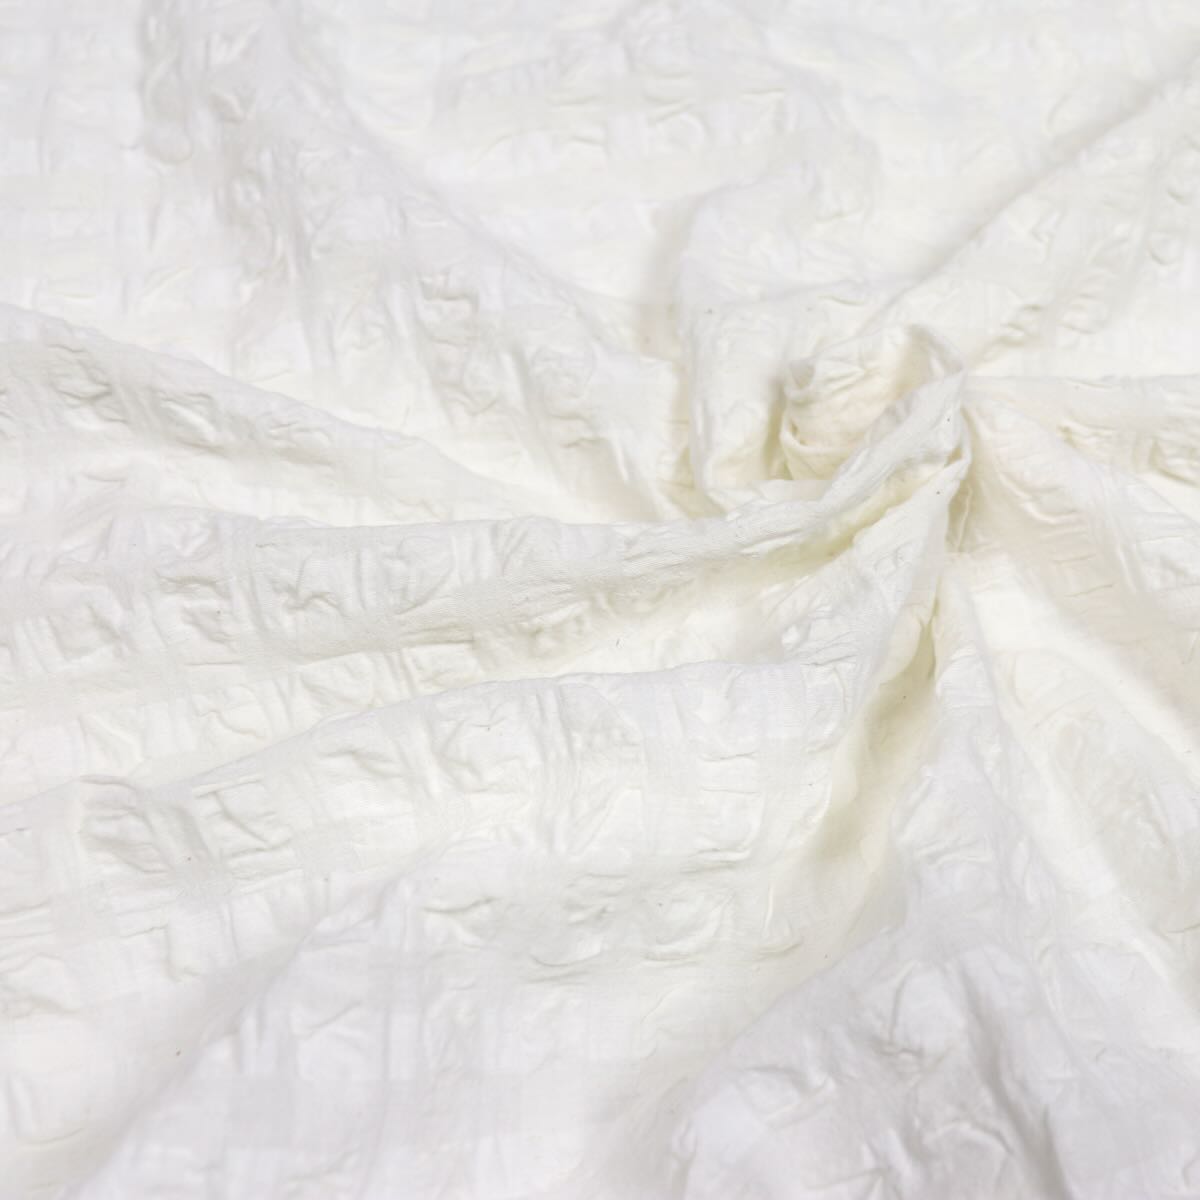 all cotton seersucker fabric hand woven texture